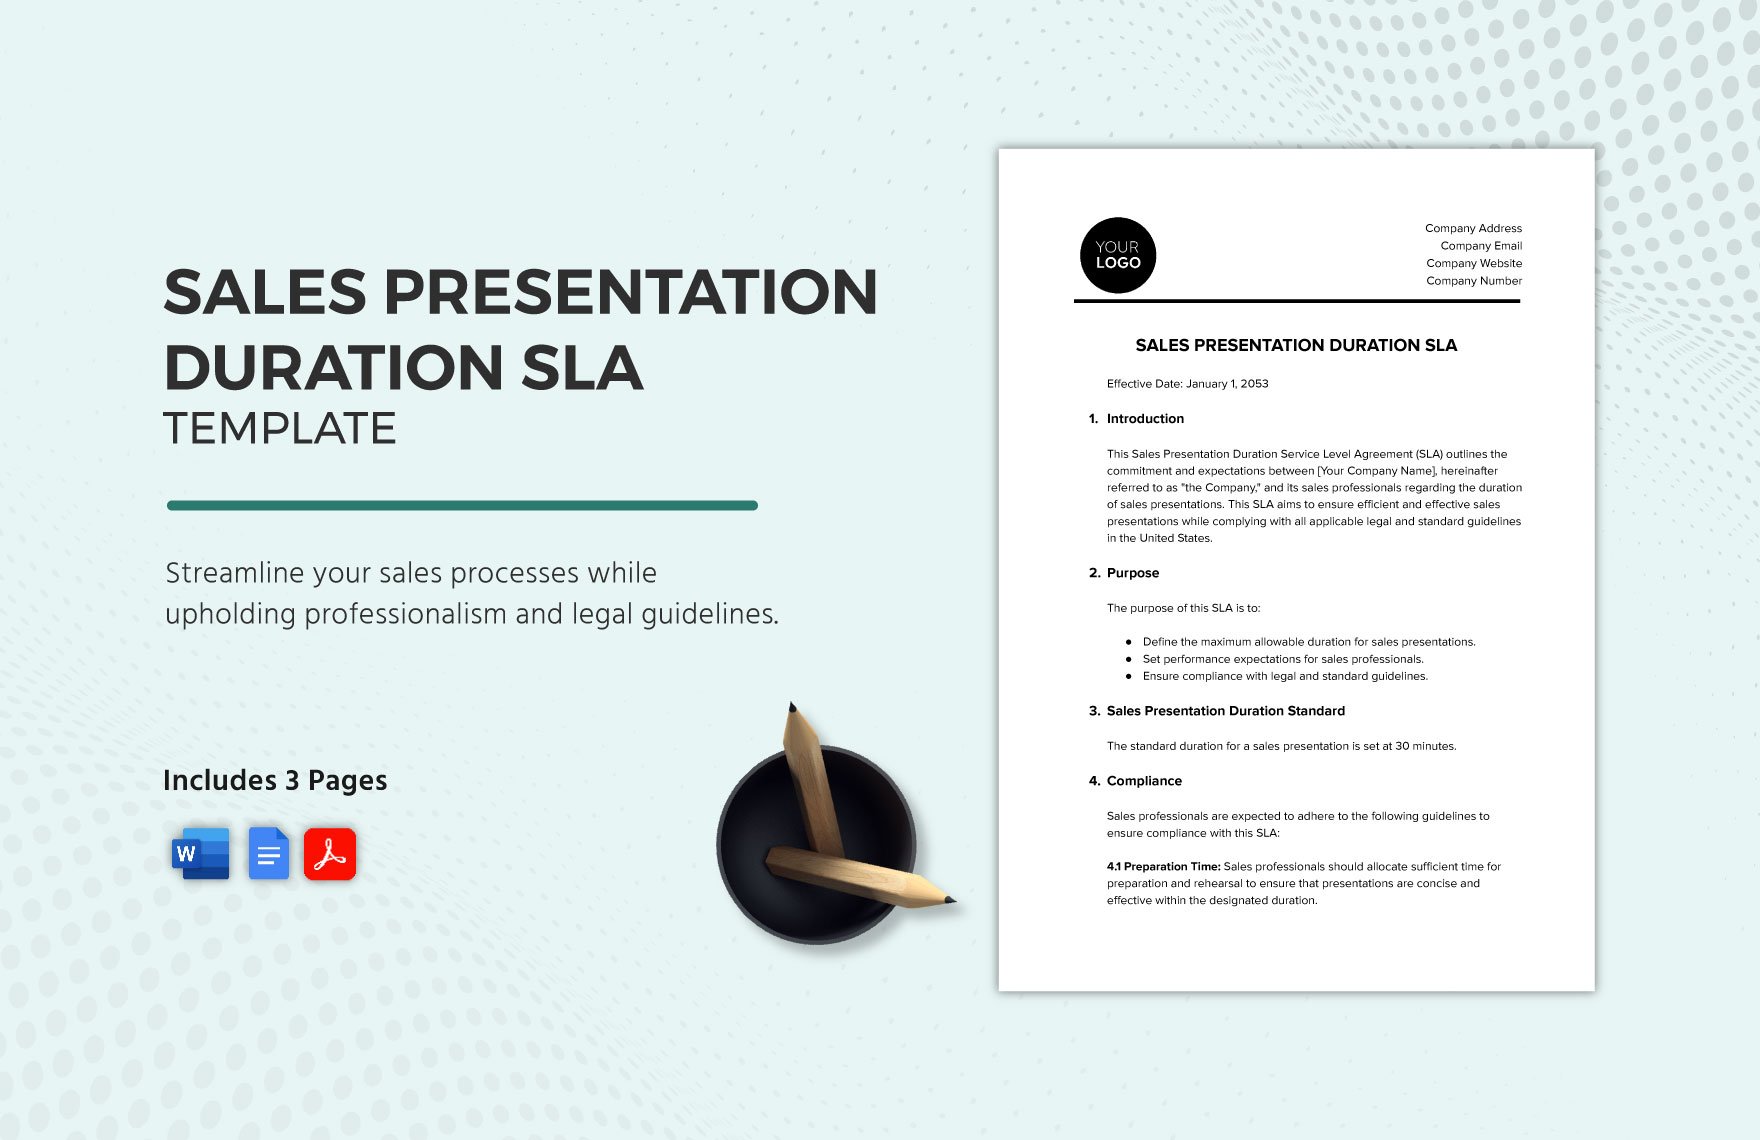 Sales Presentation Duration SLA Template in Word, Google Docs, PDF